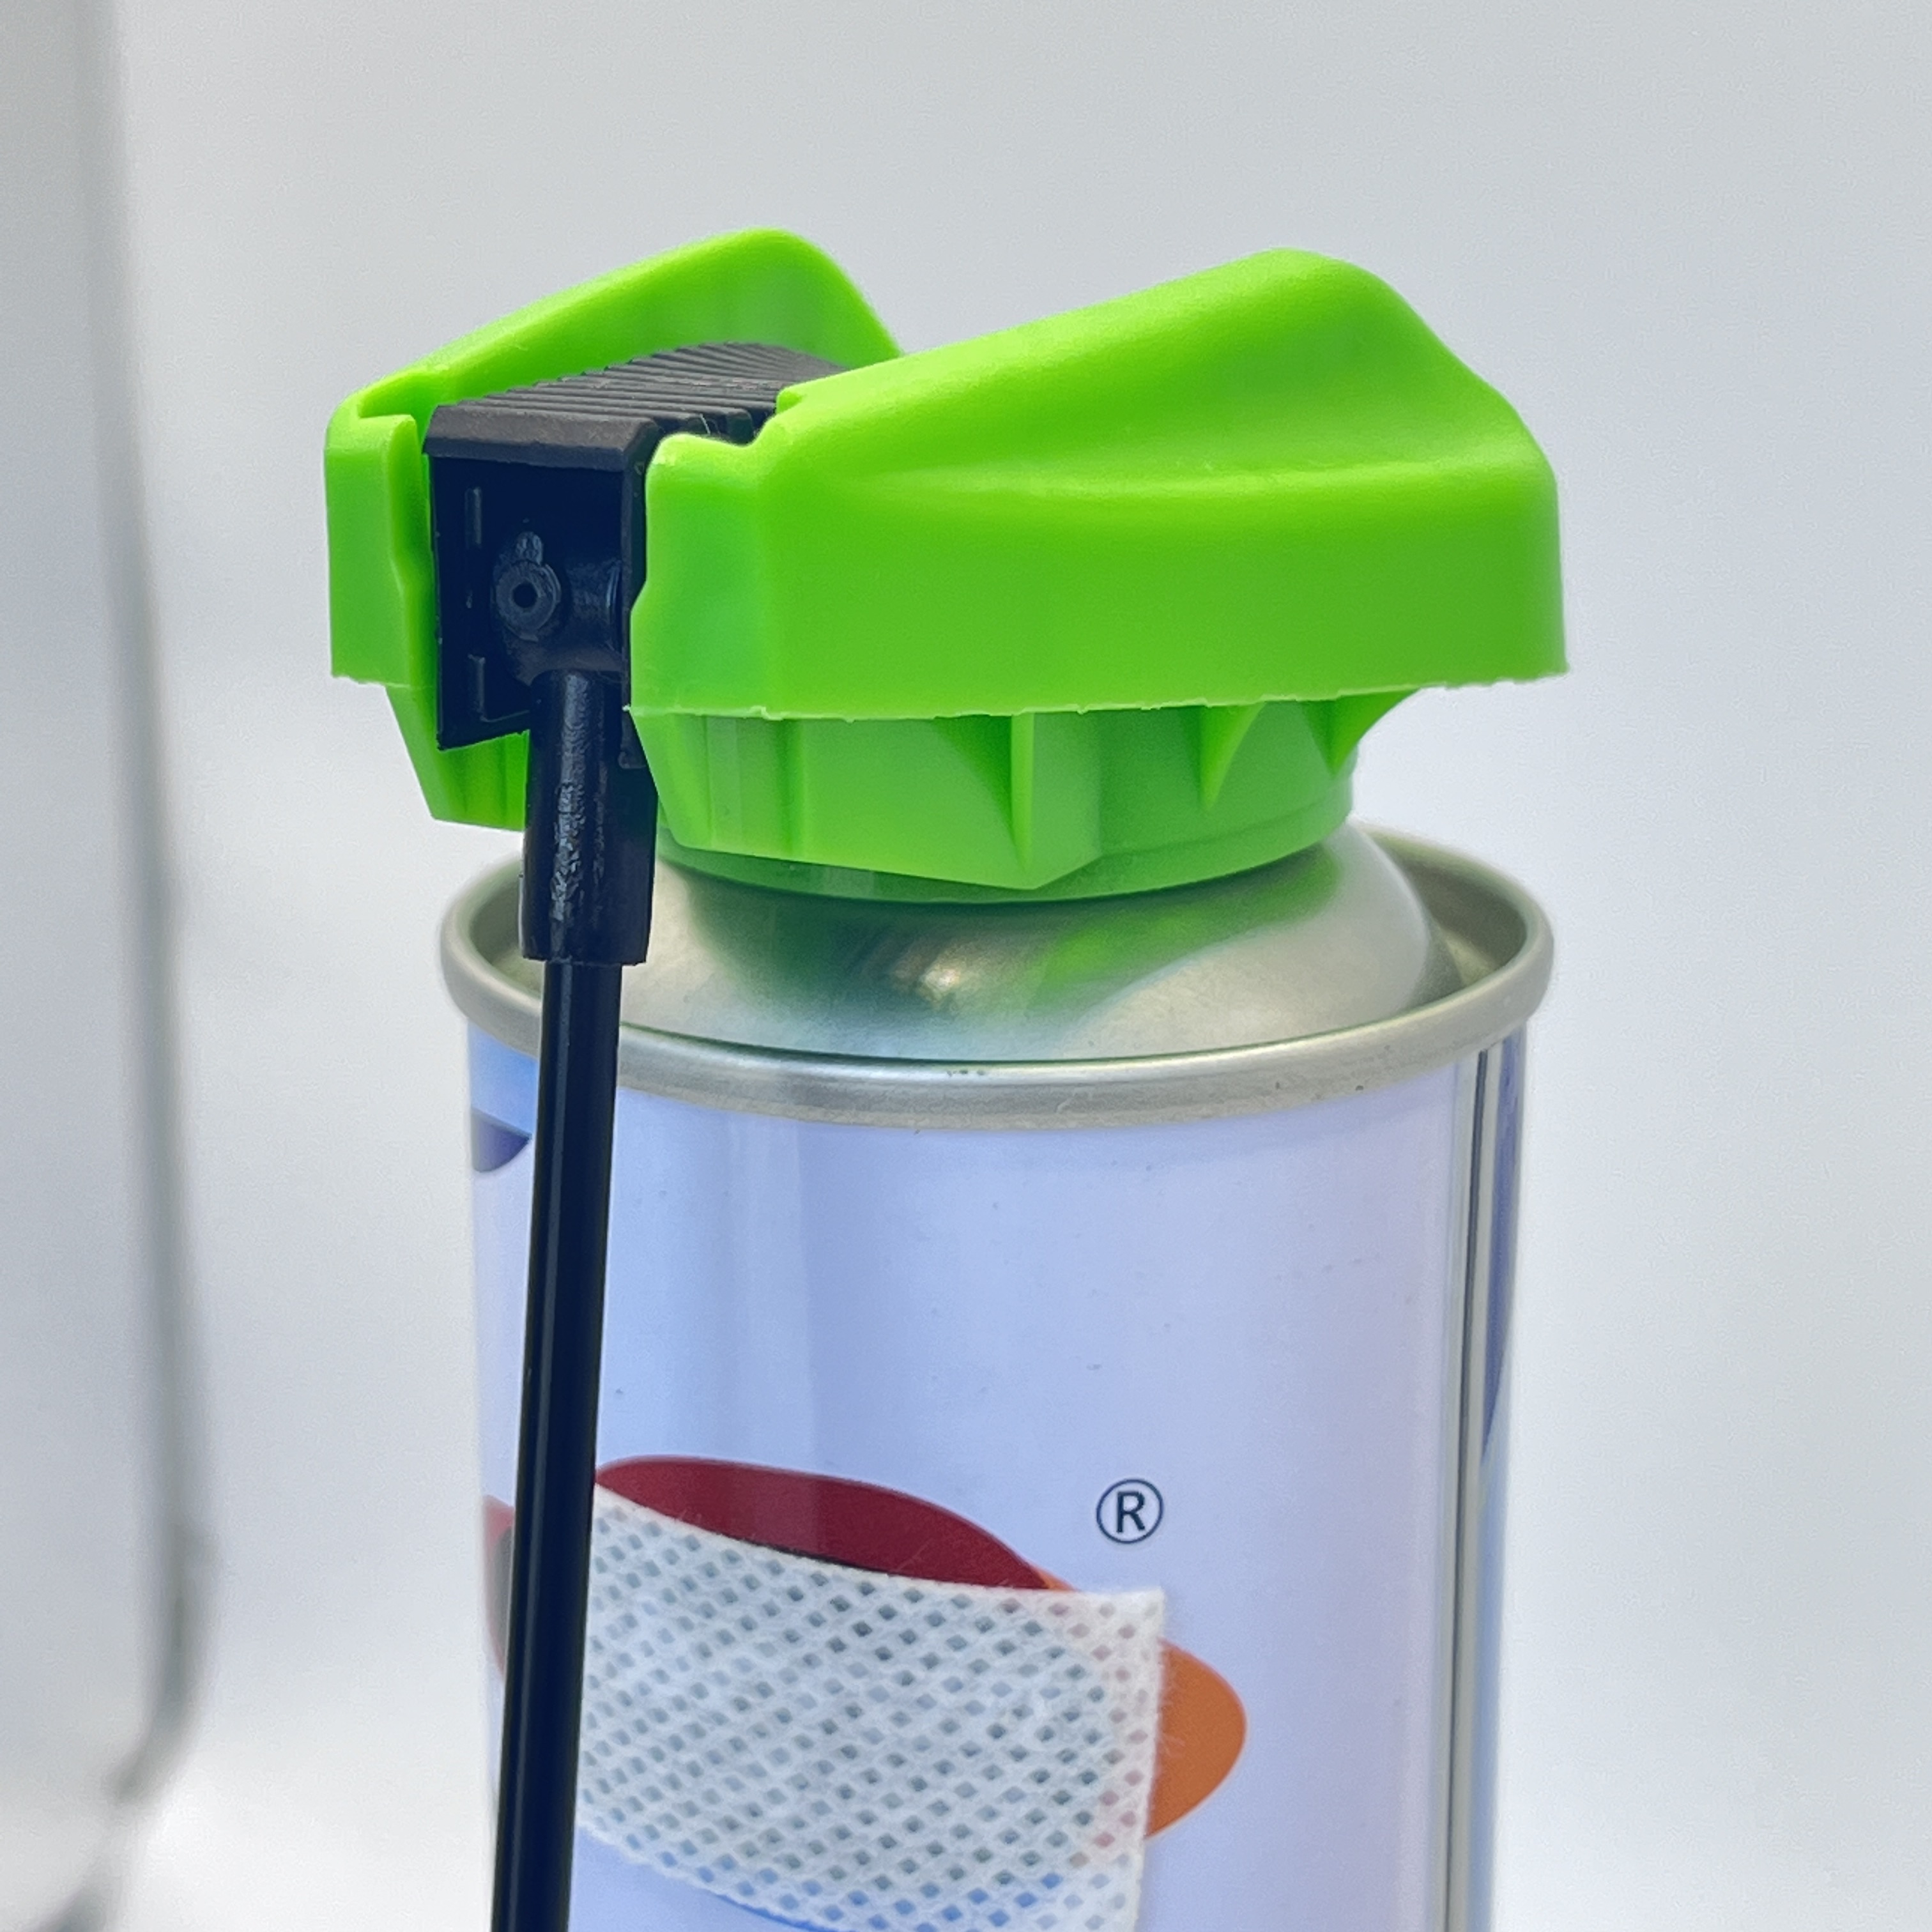 Versatile Trigger Cap with Tube - Convenient Dispensing Solution for Liquids and Chemicals